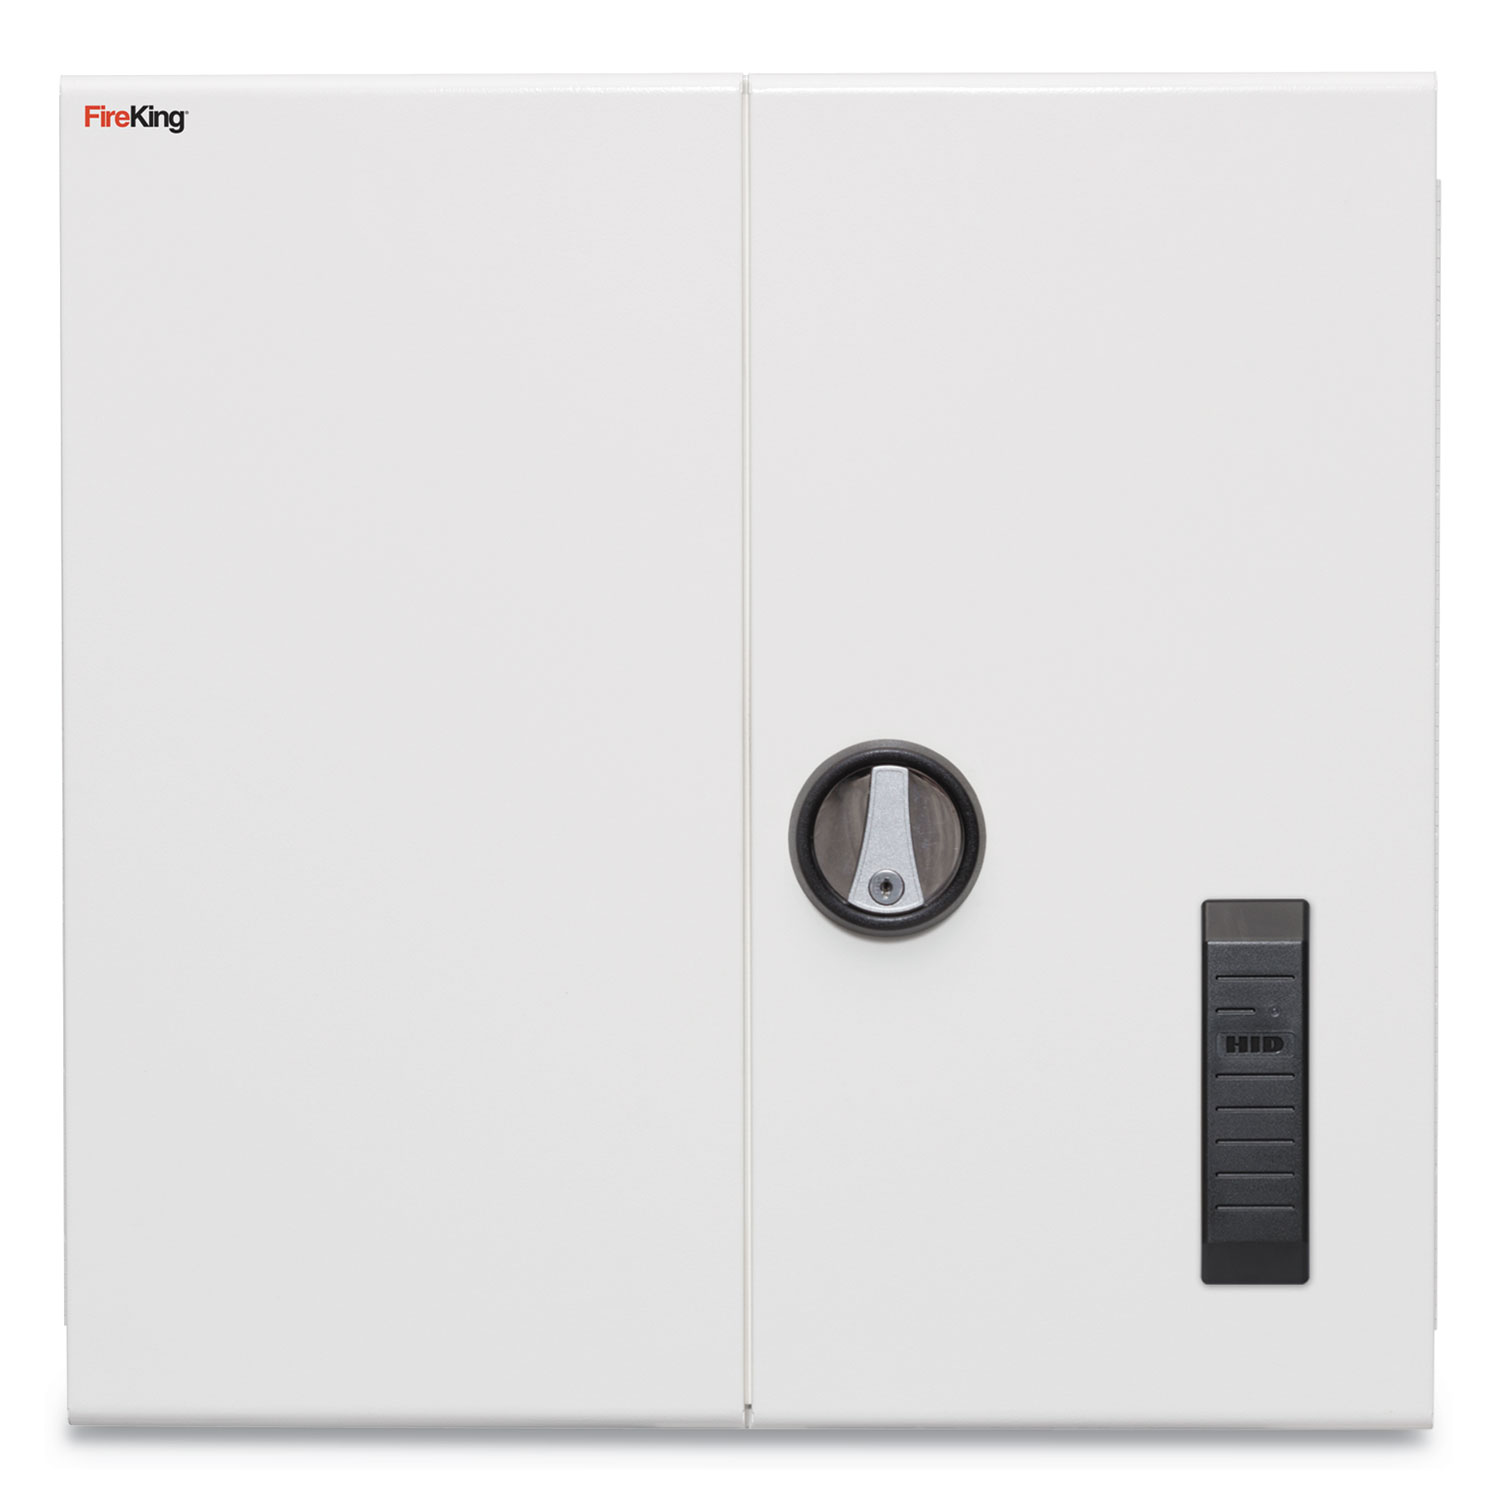  FireKing 24MSC-ELRWT Medical Storage Cabinet with Electronic Lock, 24w x 14d x 24h, White (FIR24MSCELRWT) 